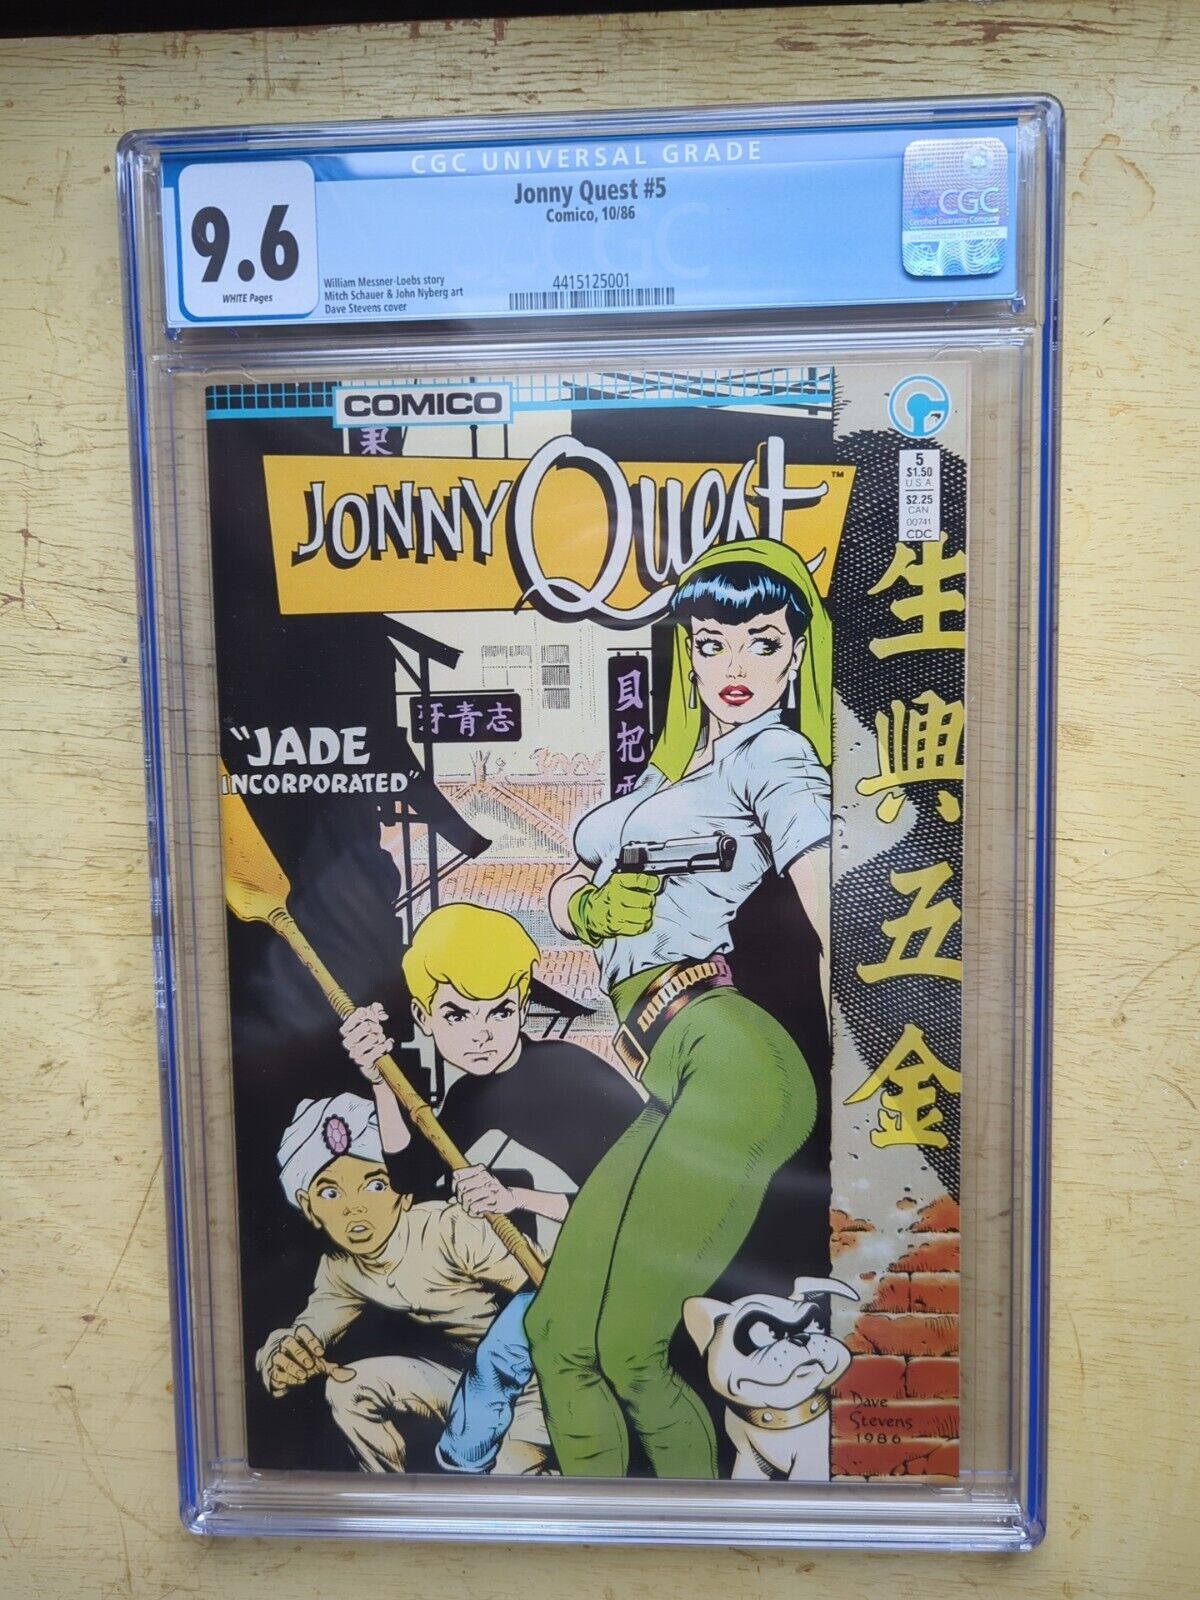 Jonny Quest #5 - CGC 9.6 - Dave Stevens Cover - Comico - 1986 - Nice Copy 